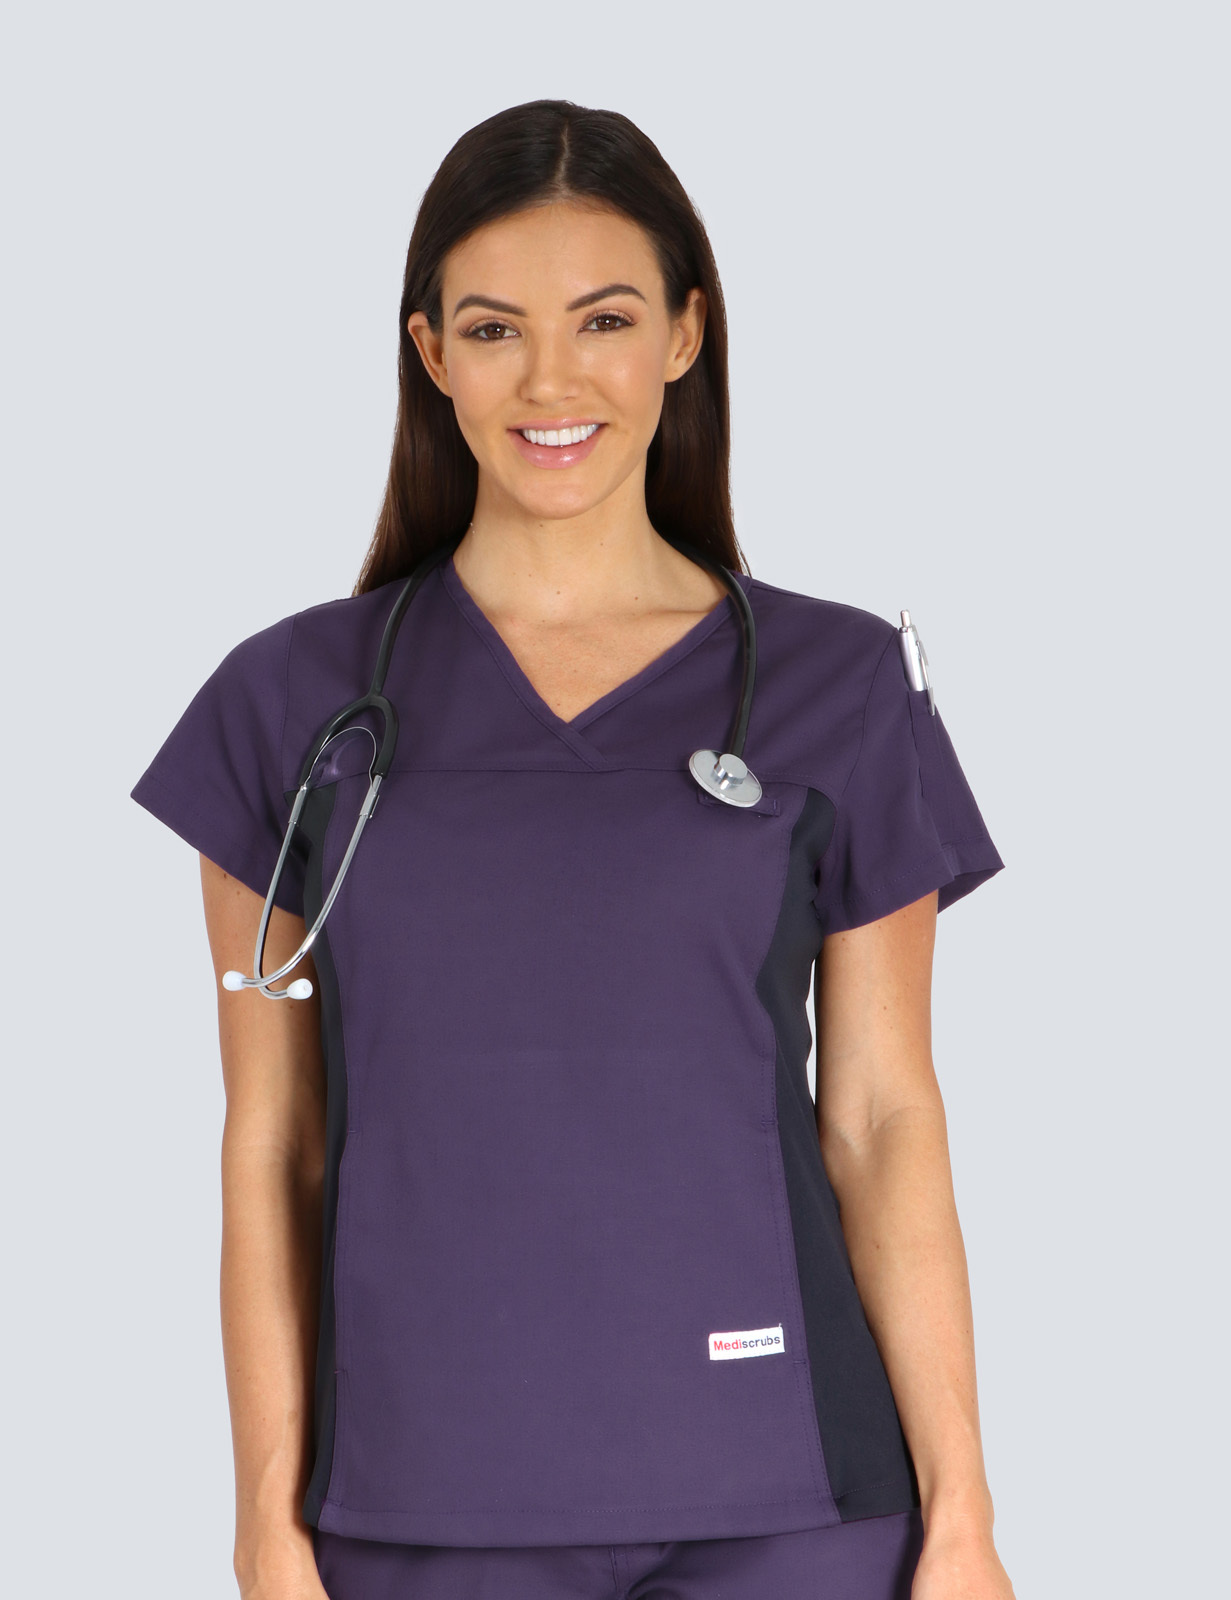 Ipswich Hospital Pharmacy Uniform Top Only Bundle (Women's Fit Spandex in Aubergine + 3 Logos)